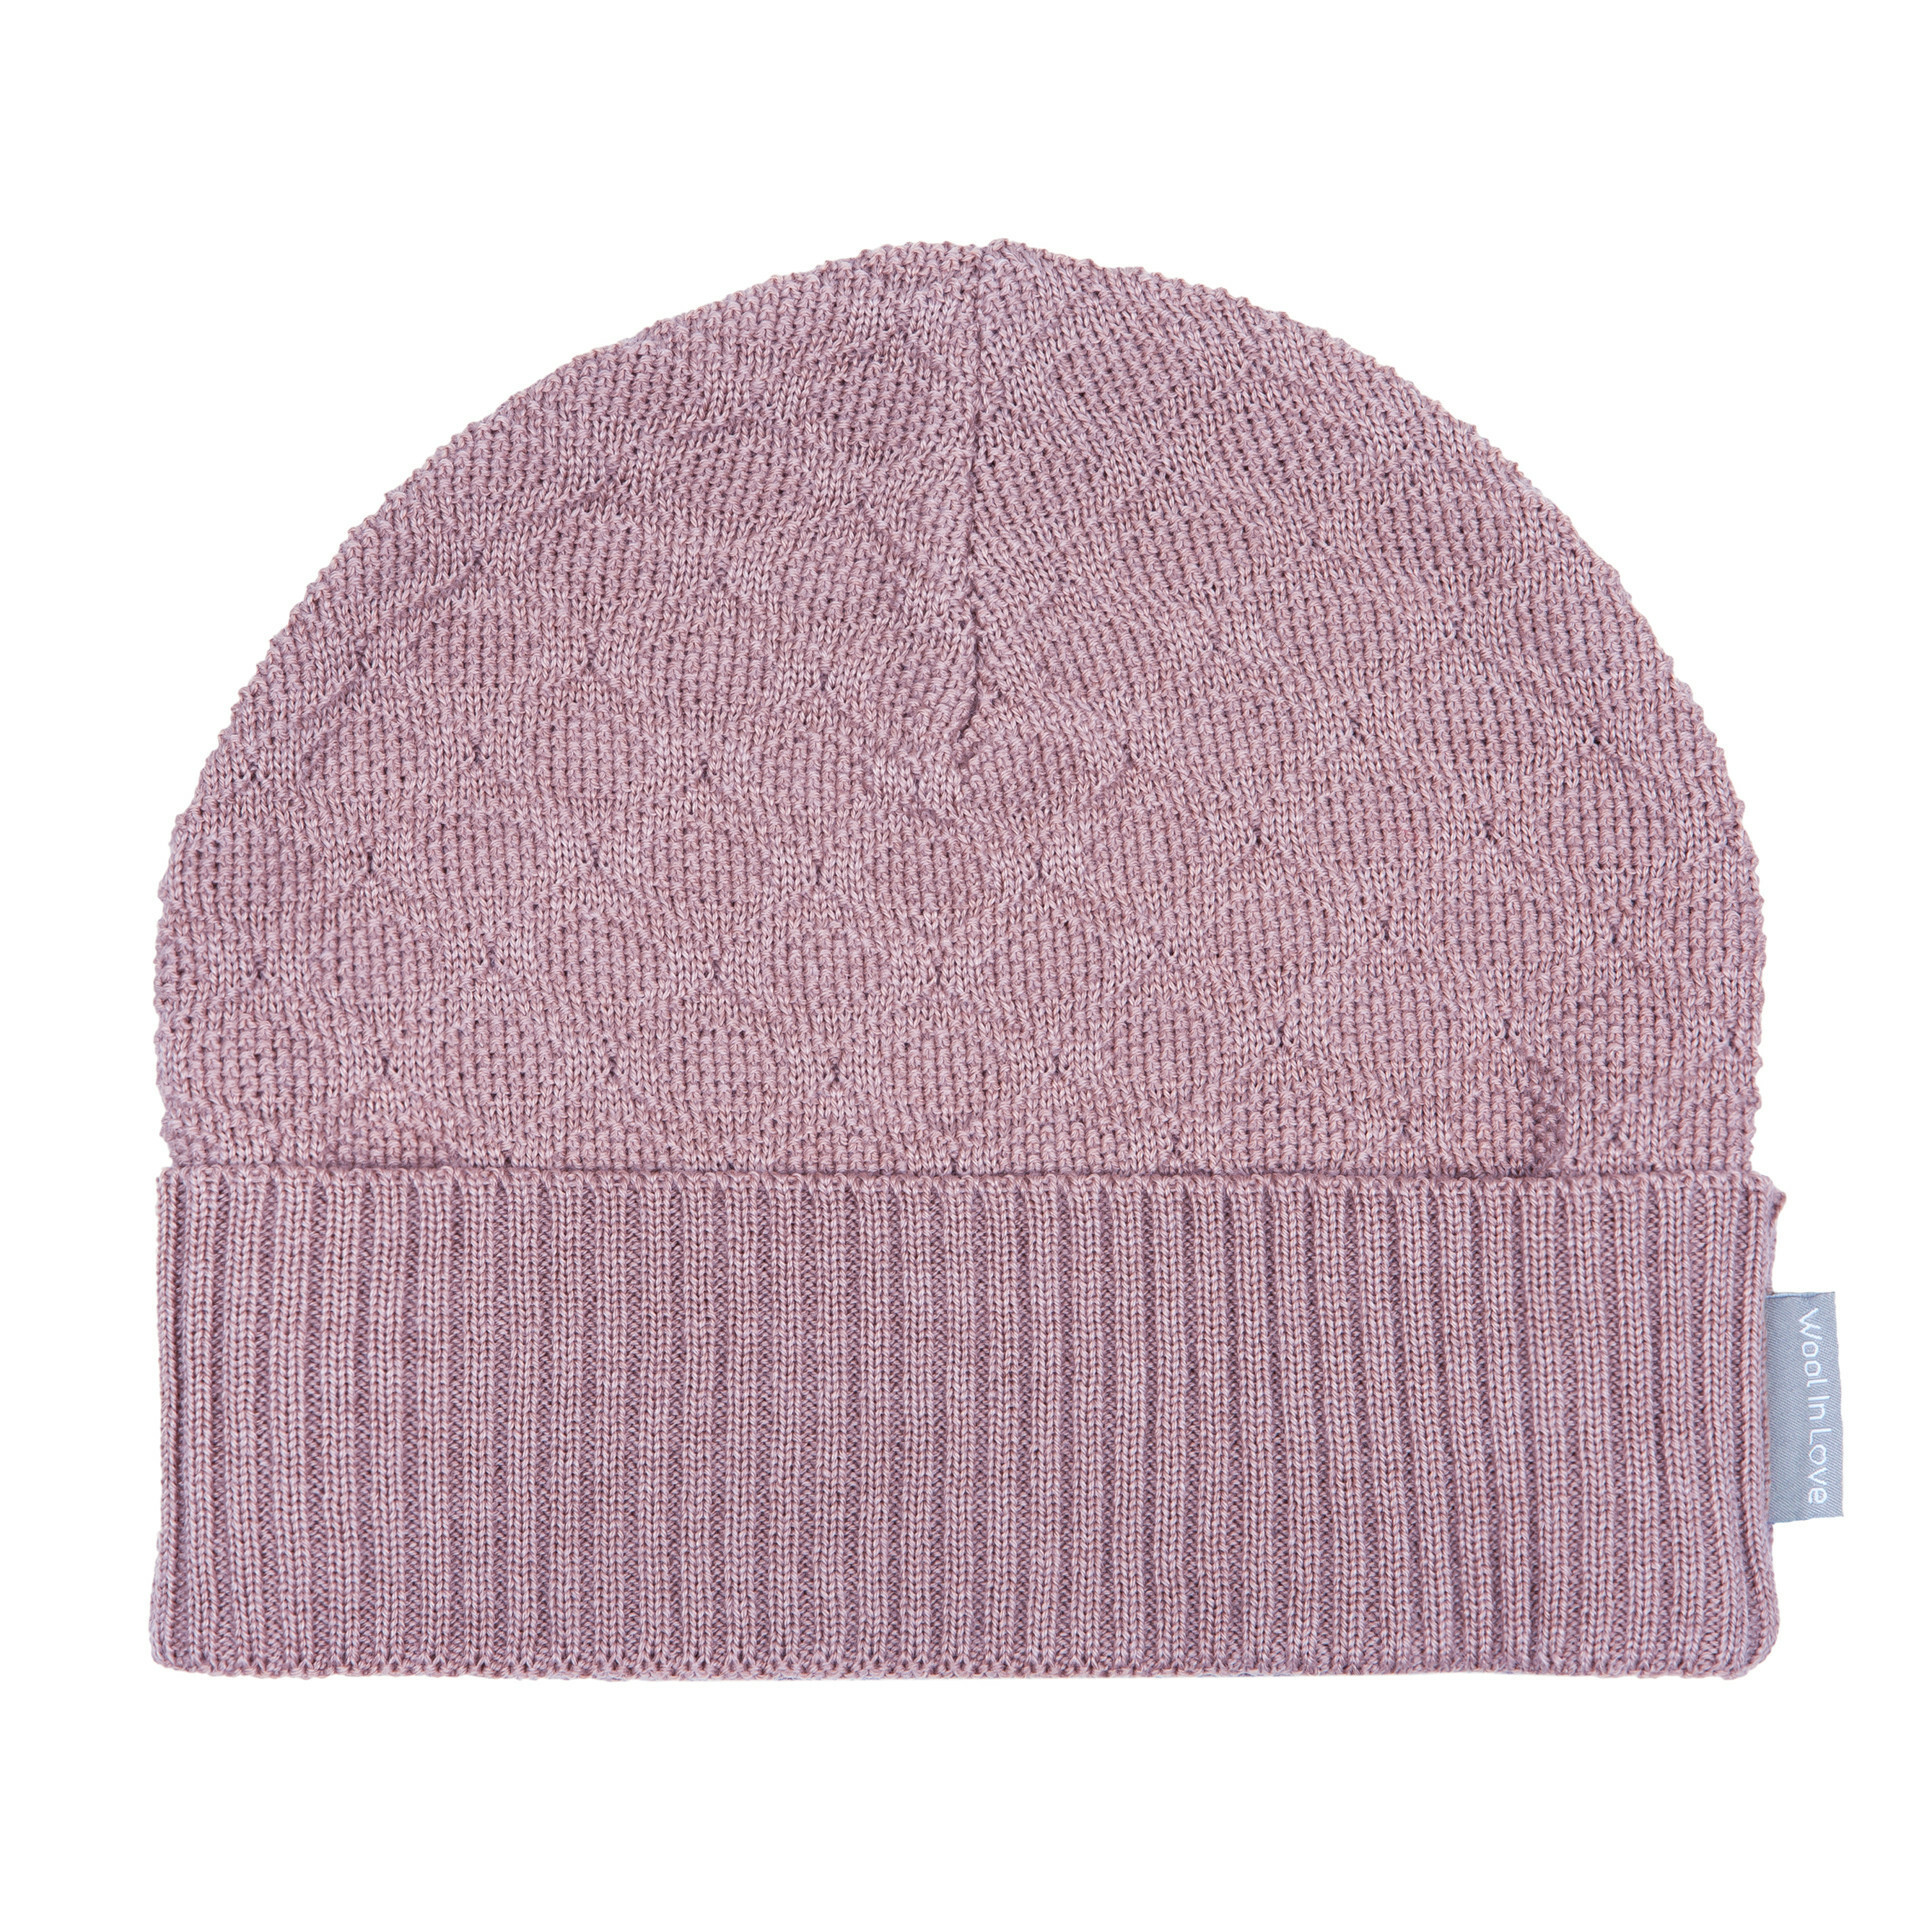 Merino double layer hat HAPPINESS - Lavender - 44/46